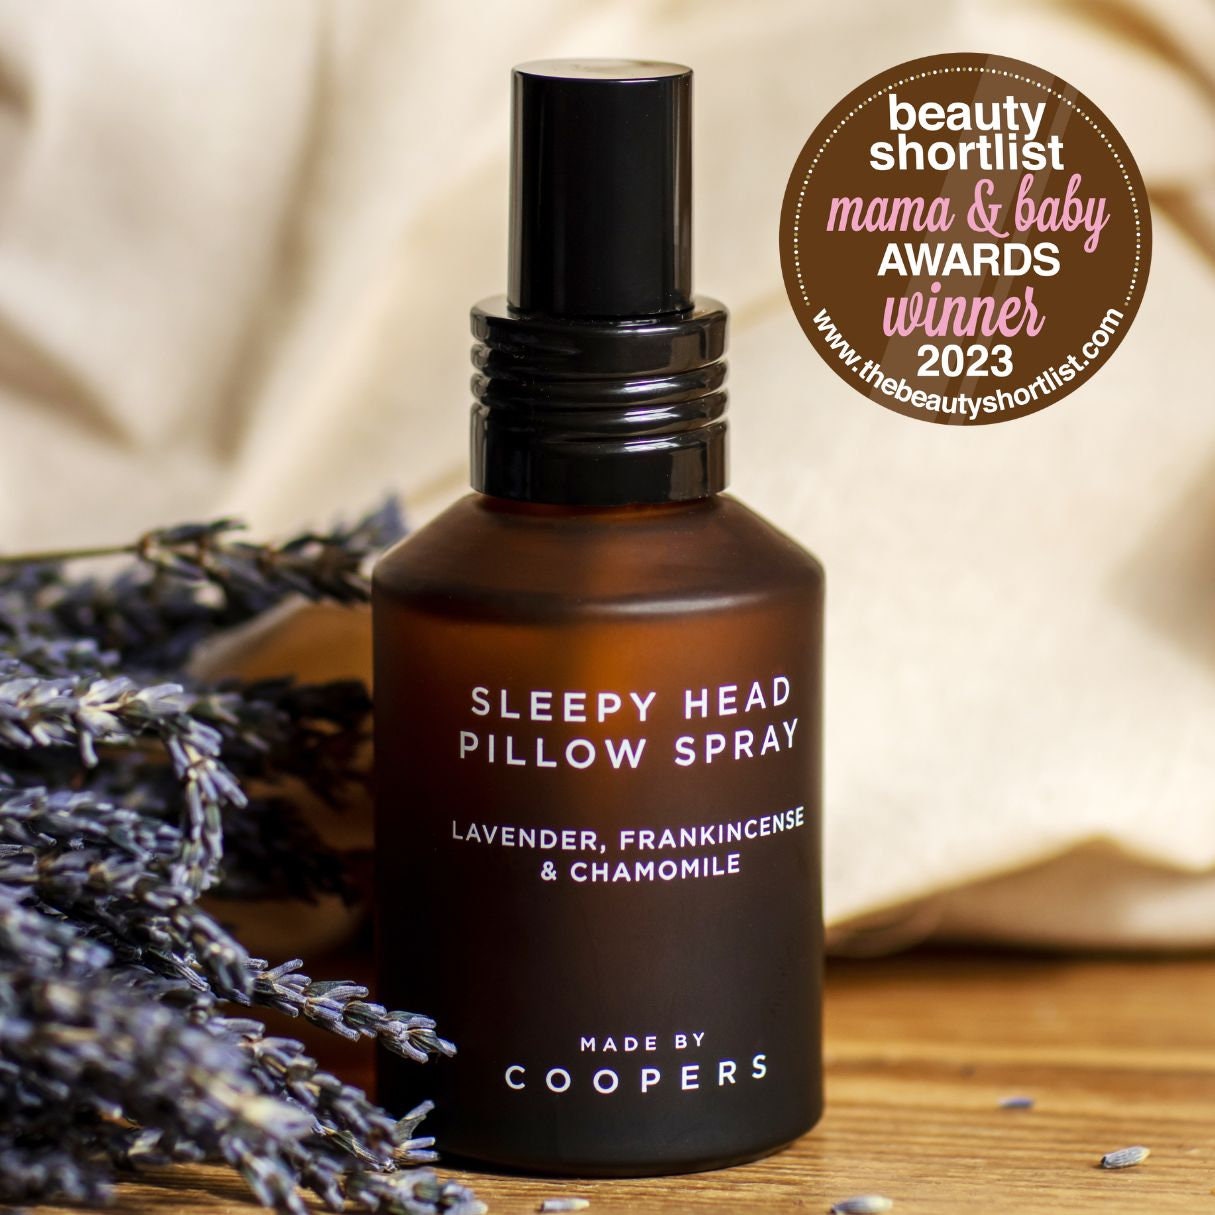 Sleepy Head Pillow Spray With Lavender Multi Award-winning Pillow